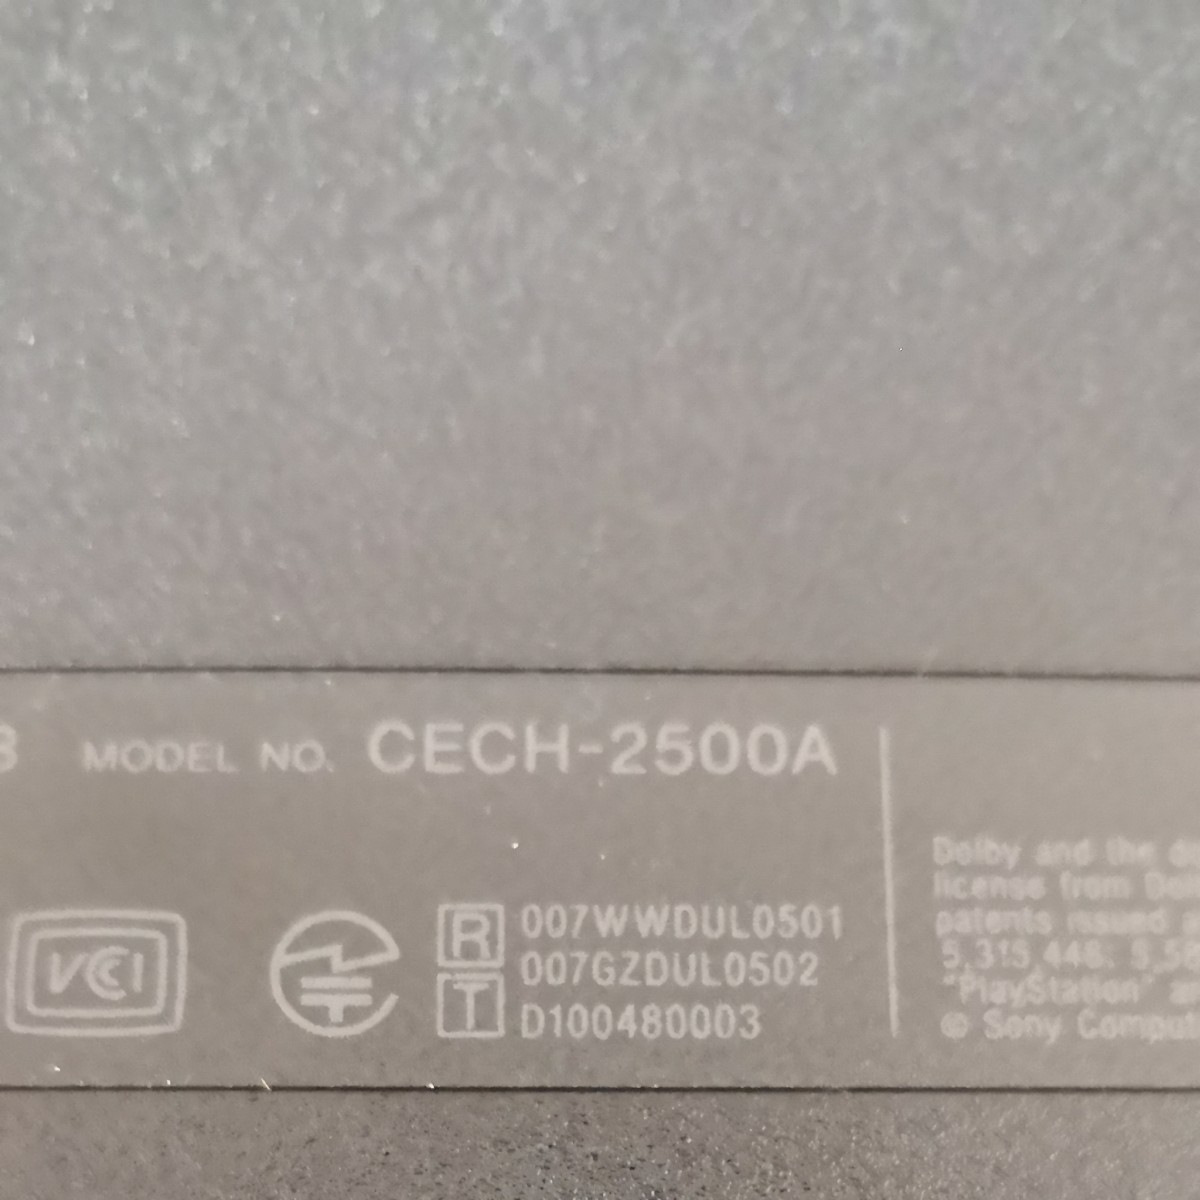 PlayStation3 CECH-2500A(160GB)ゲームソフト付属 